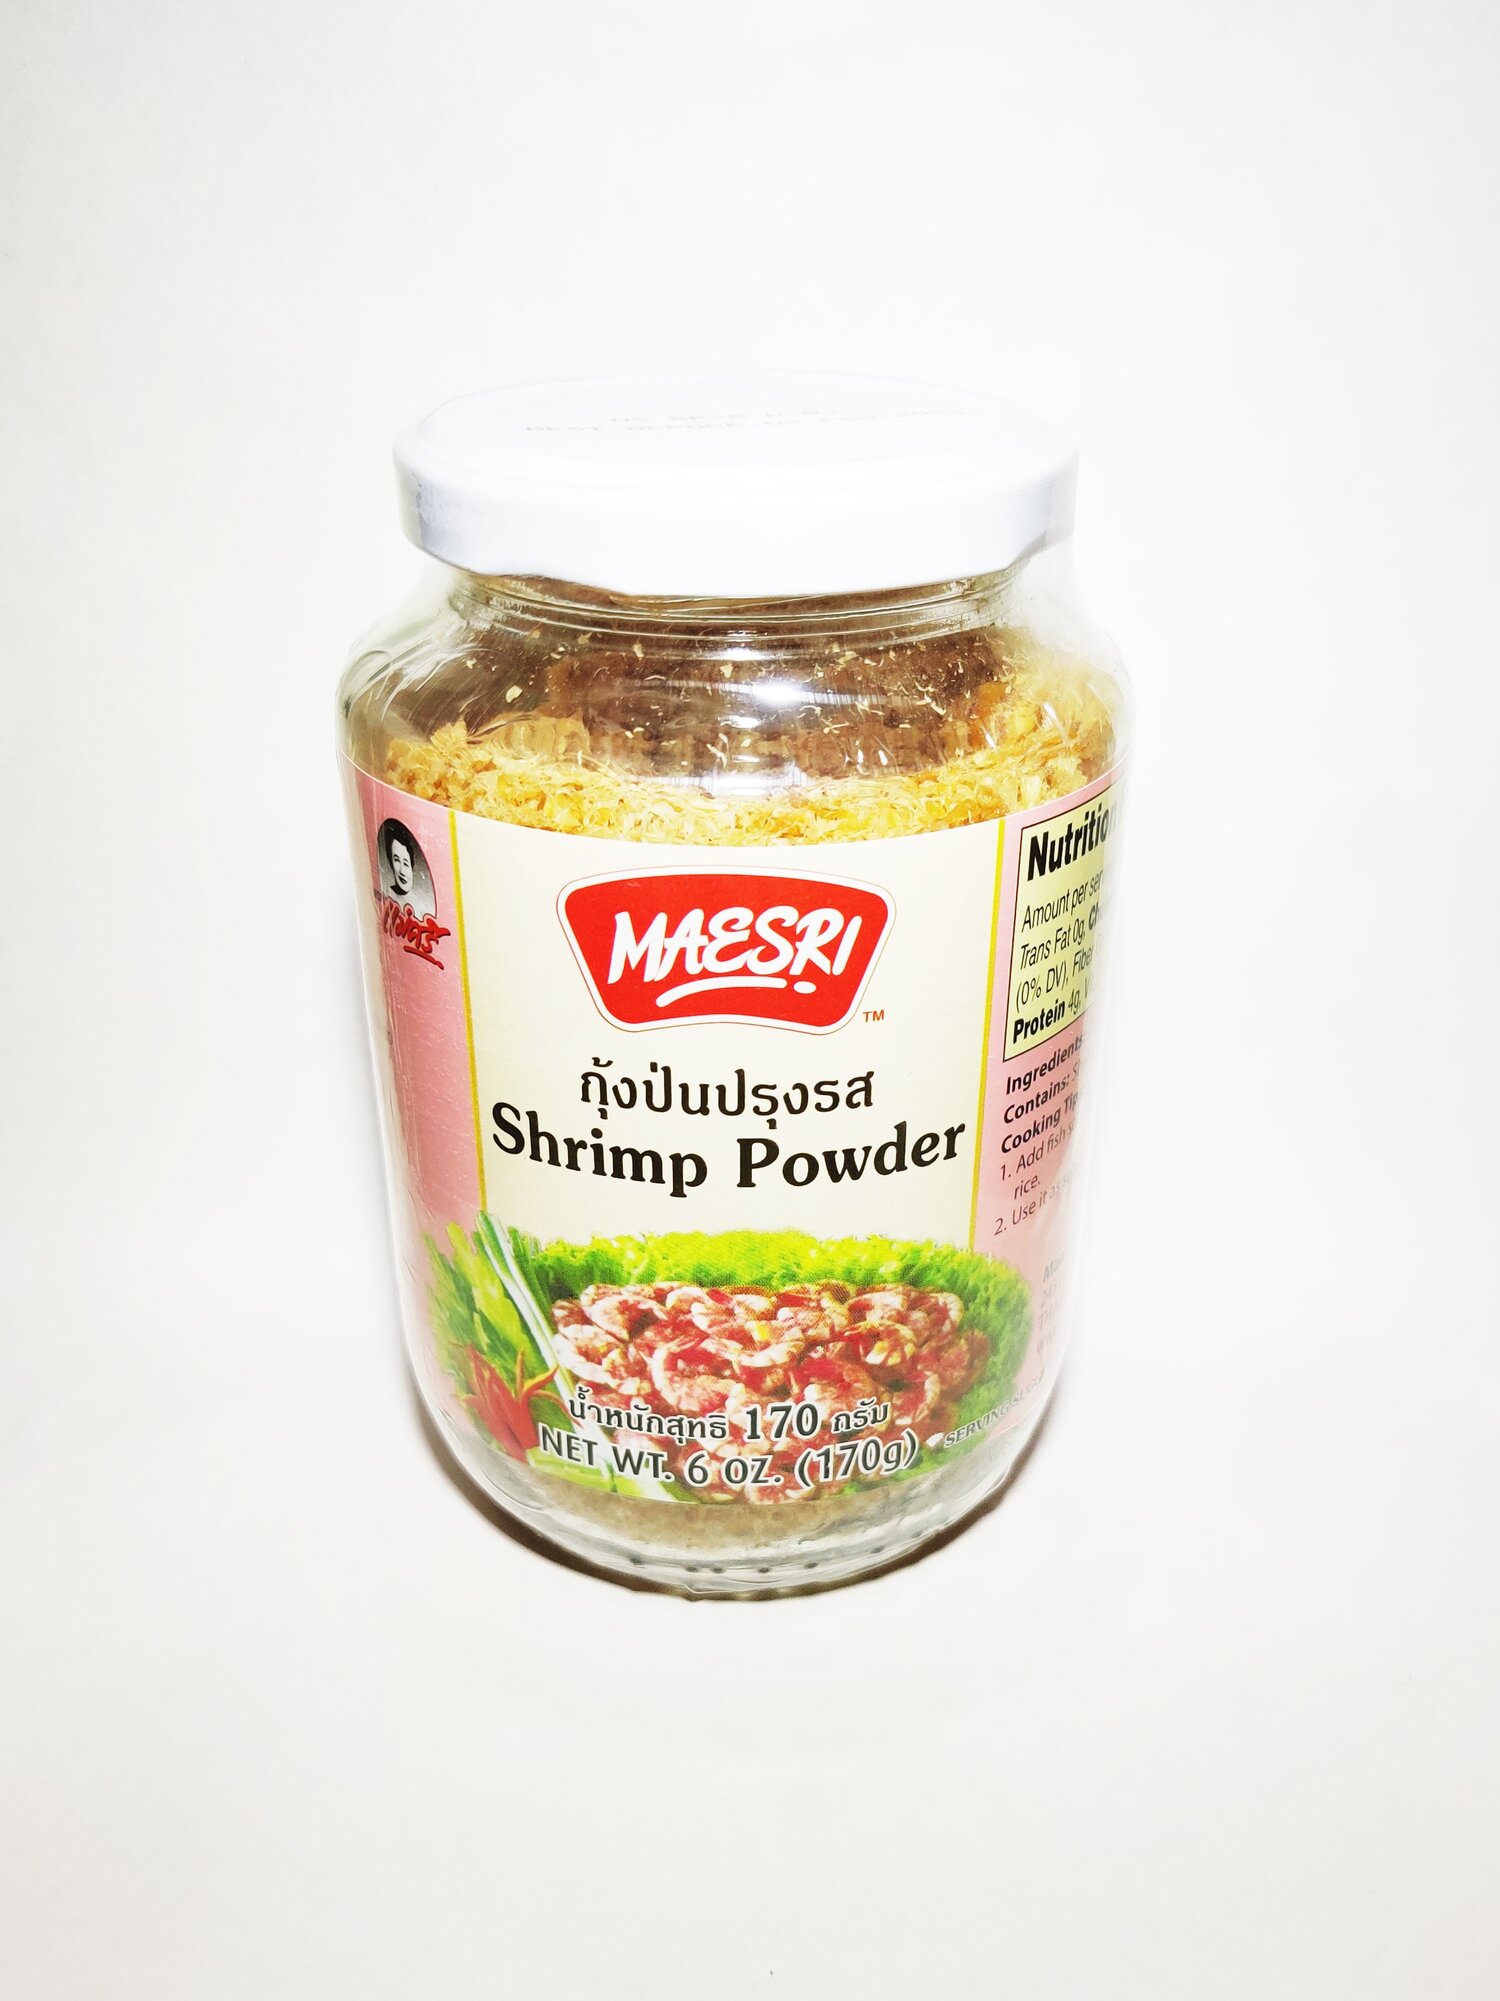 Shrimp powder/Trassi (100%) - Spice Mountain